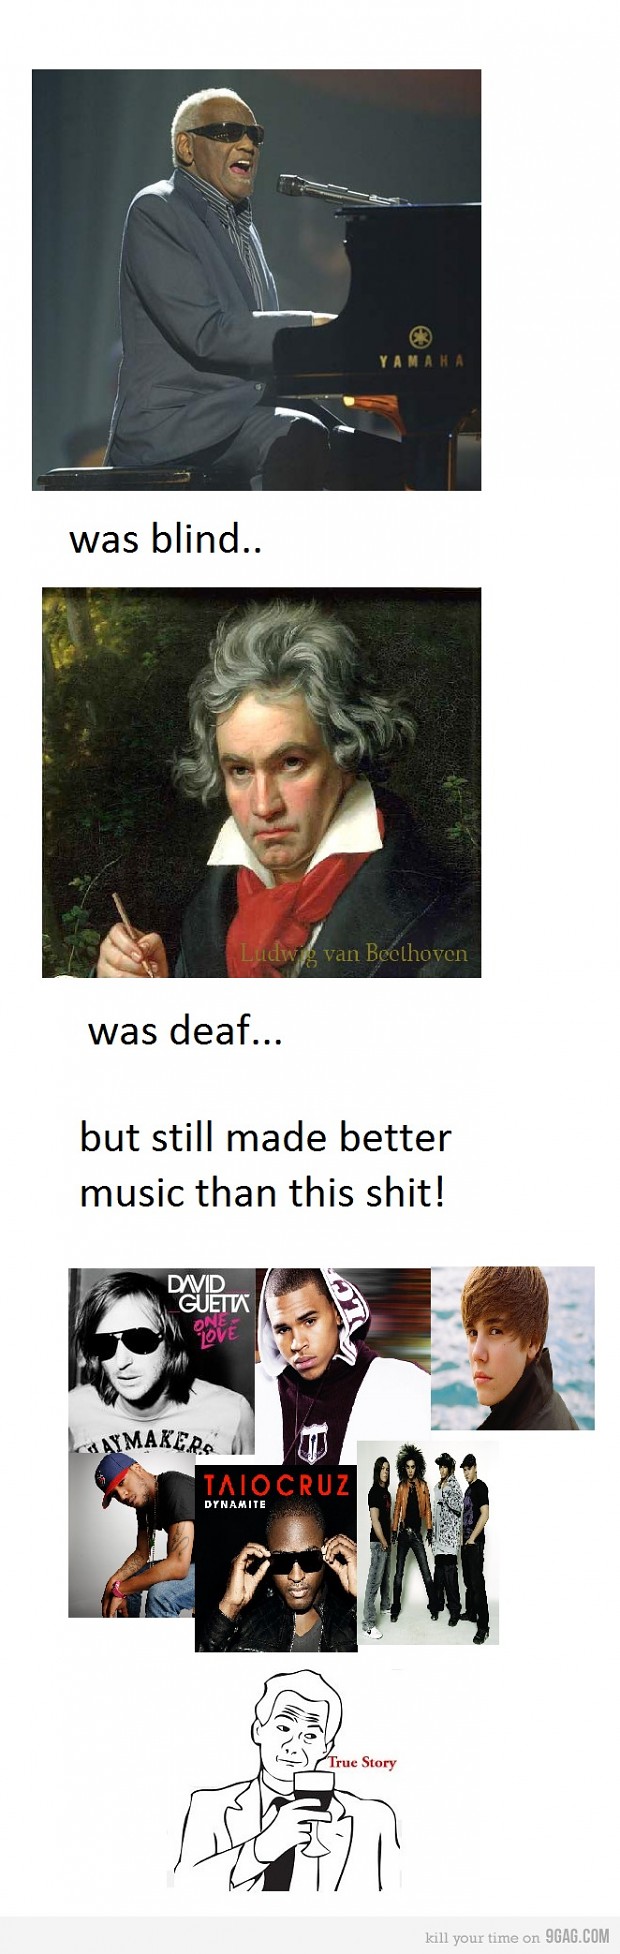 Evolution of Music